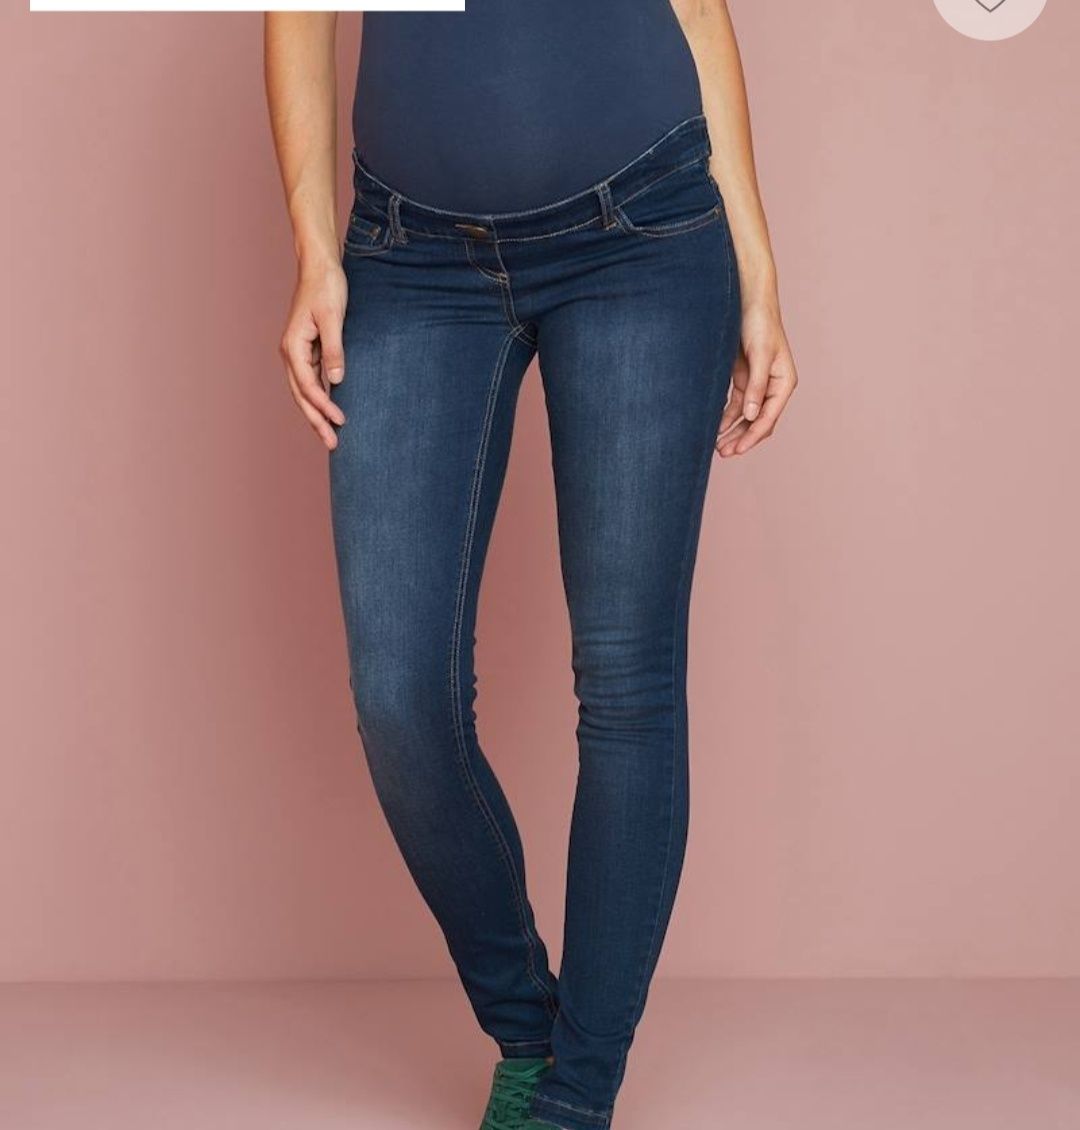 Jeans slim, entrepernas 85 cm, para grávida - ganga brut